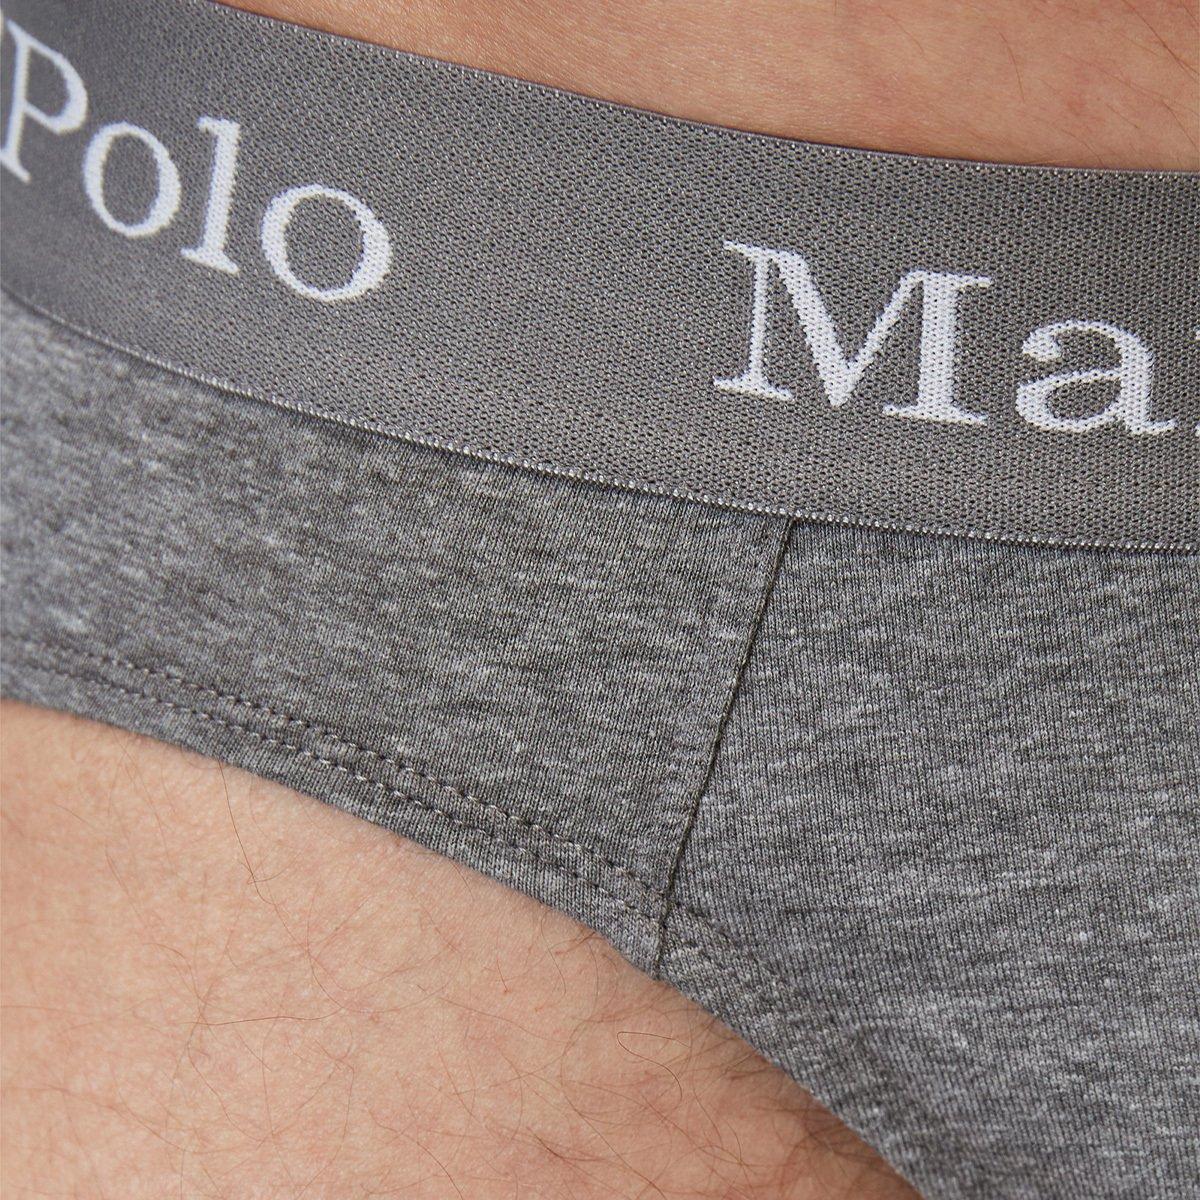 Marc O'Polo  6er Pack Elements Organic Cotton - Slip  Unterhose 